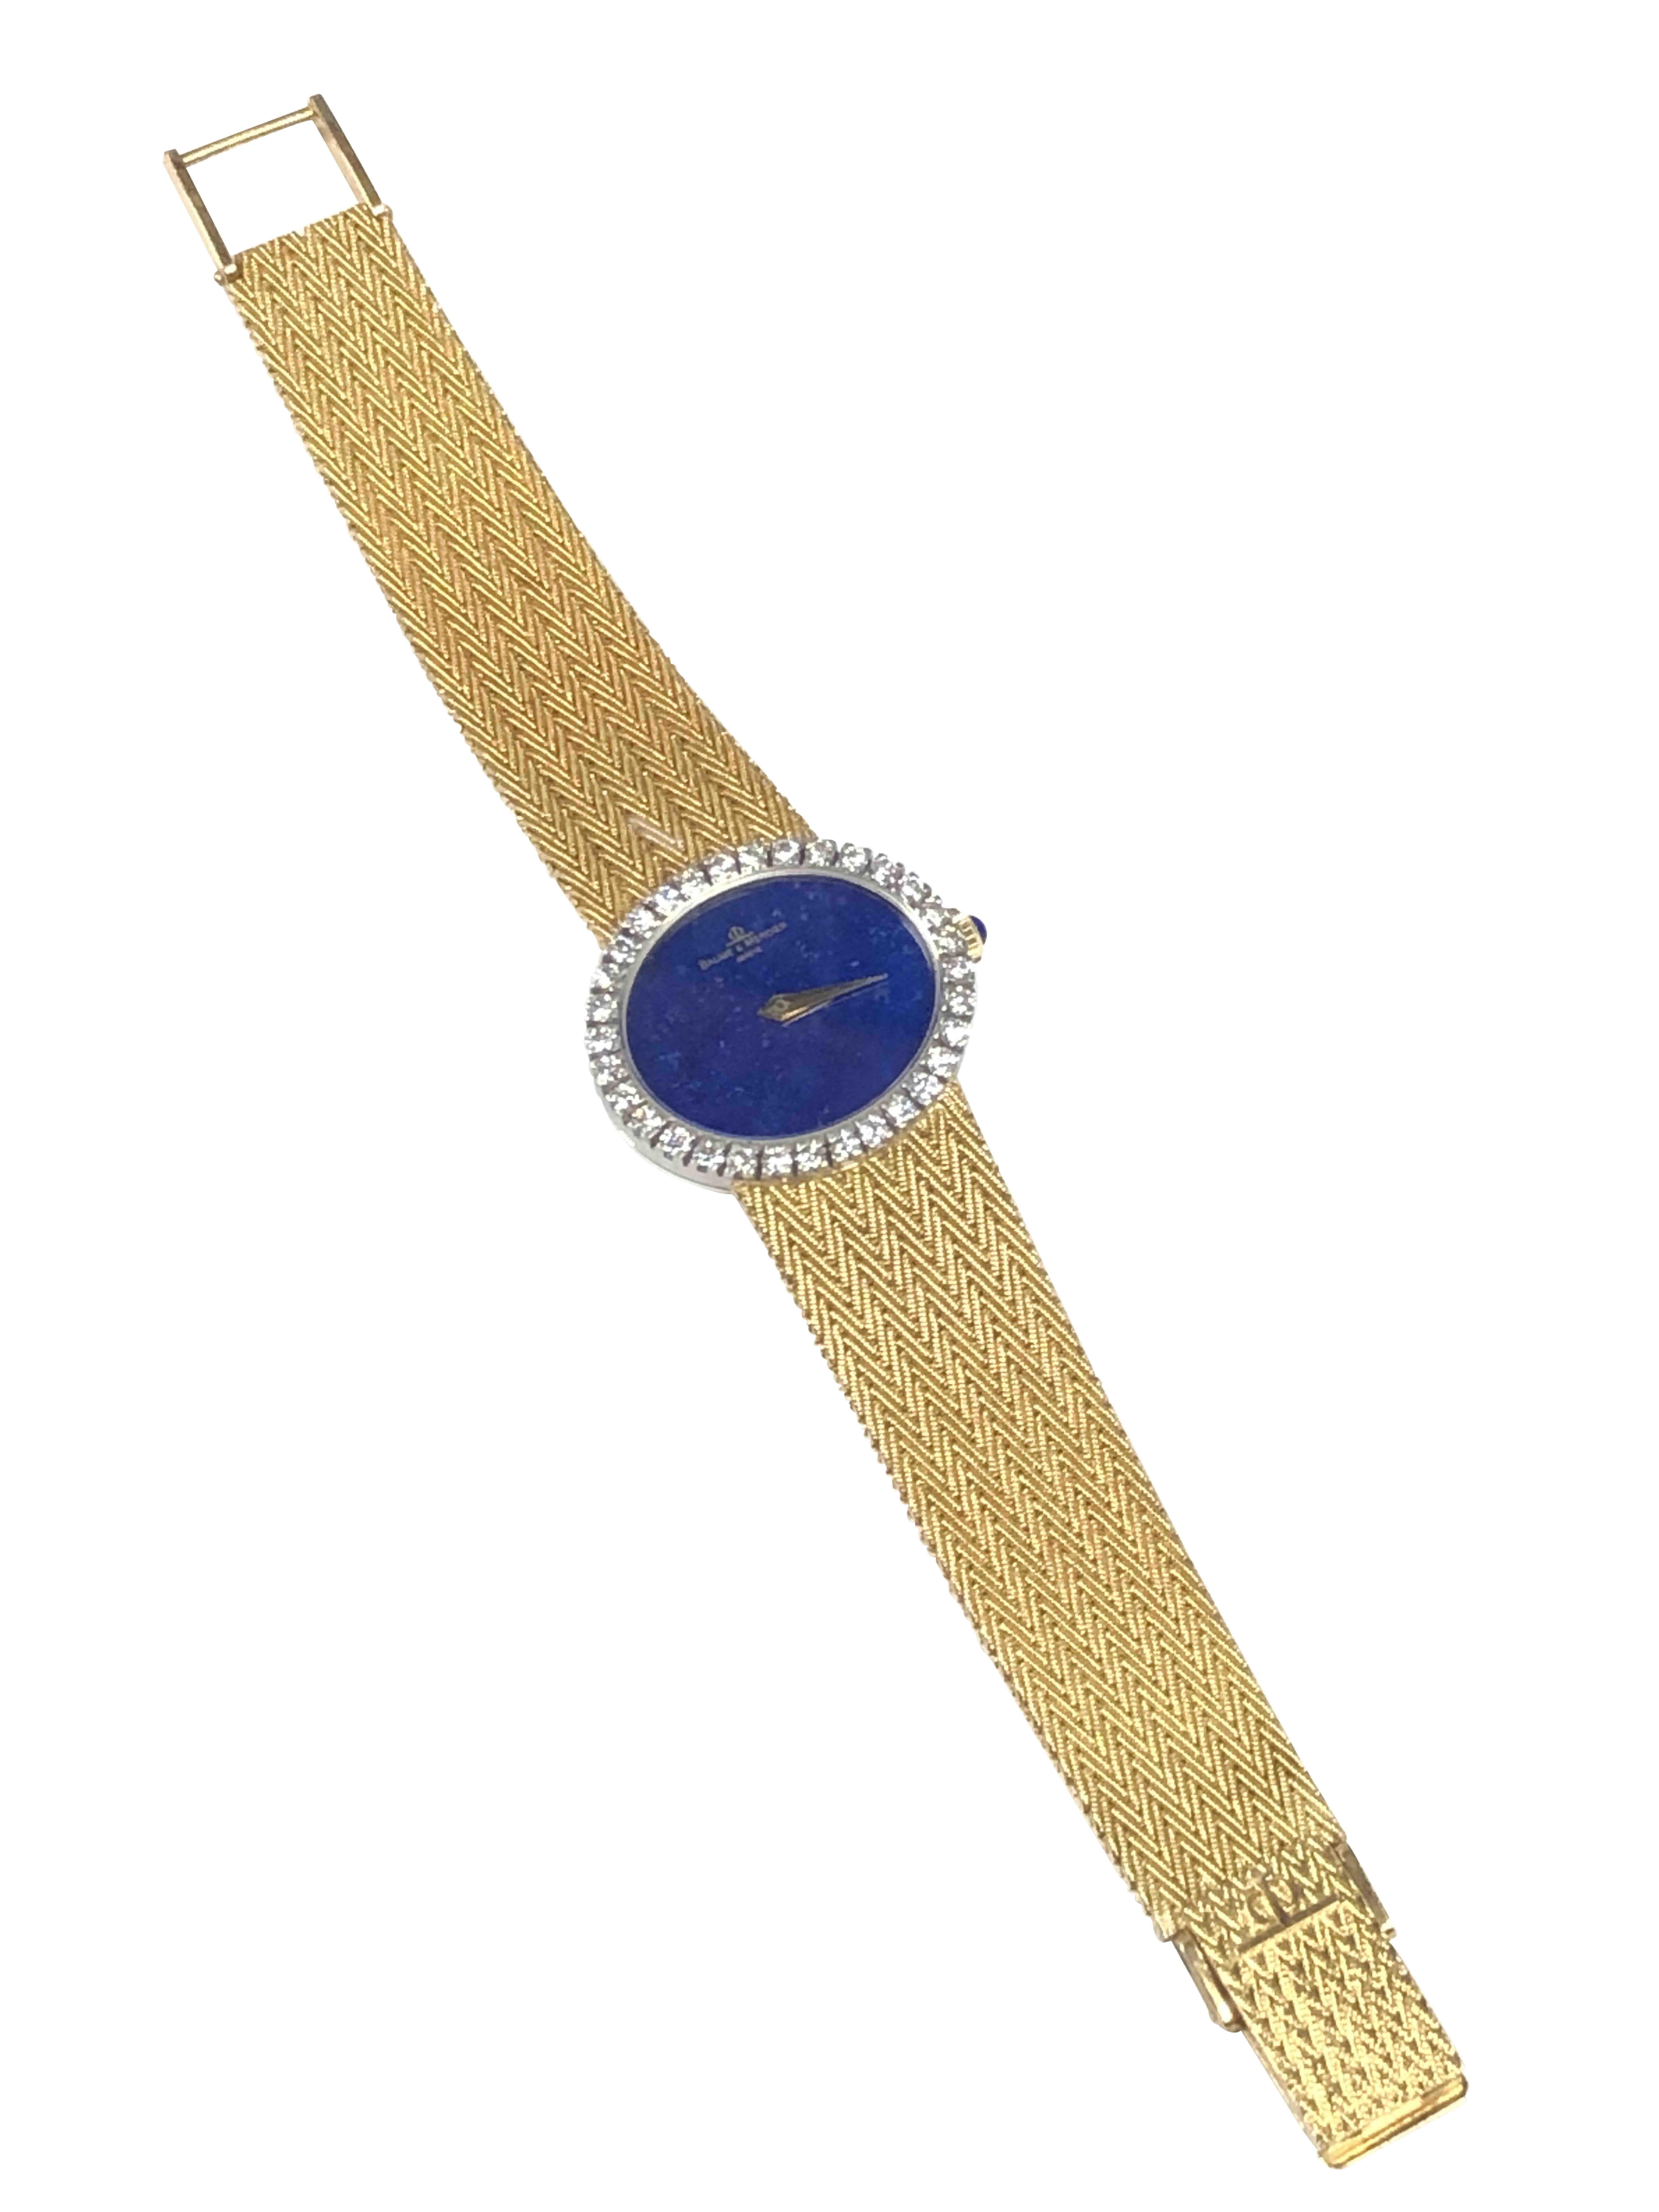 Baum & Mercier Gold Lapis Dial and Diamond Set Ladies Wristwatch 2